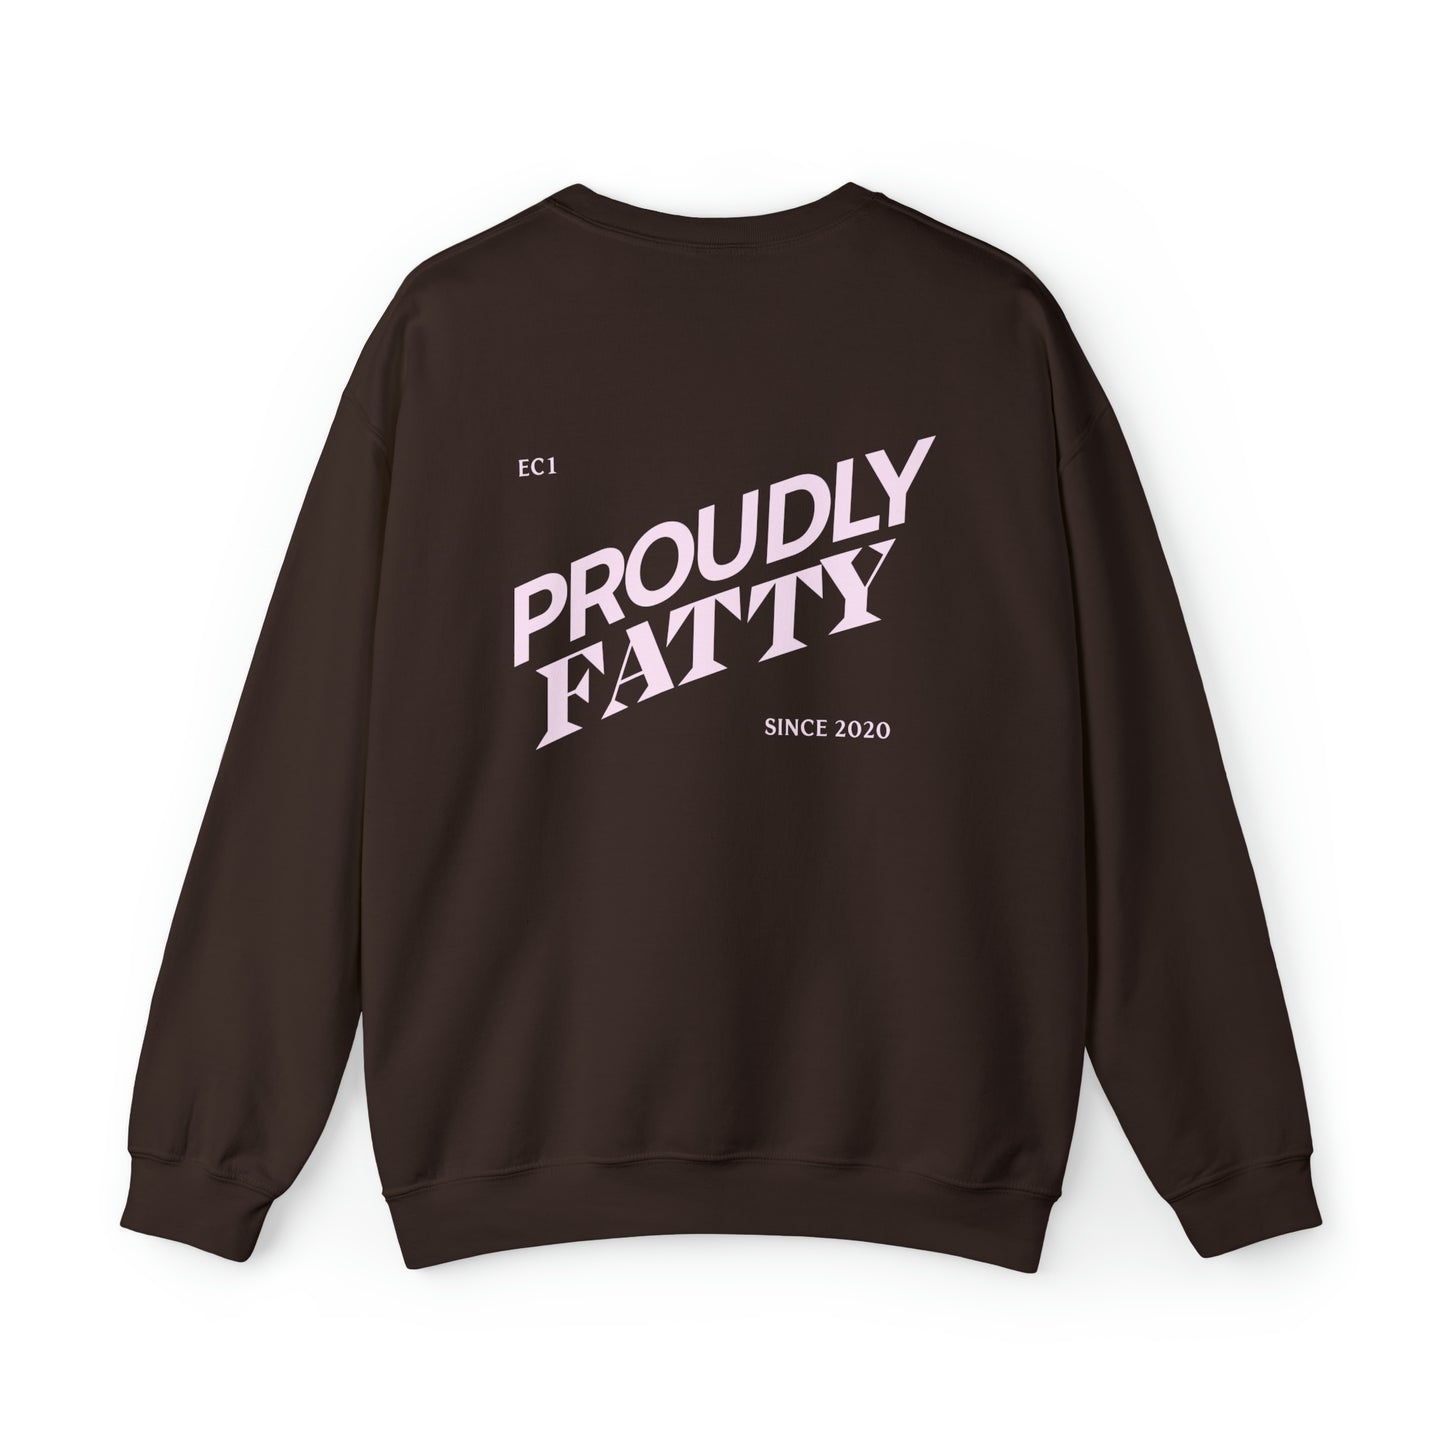 Proudly Fatty Sweatshirt - Brown